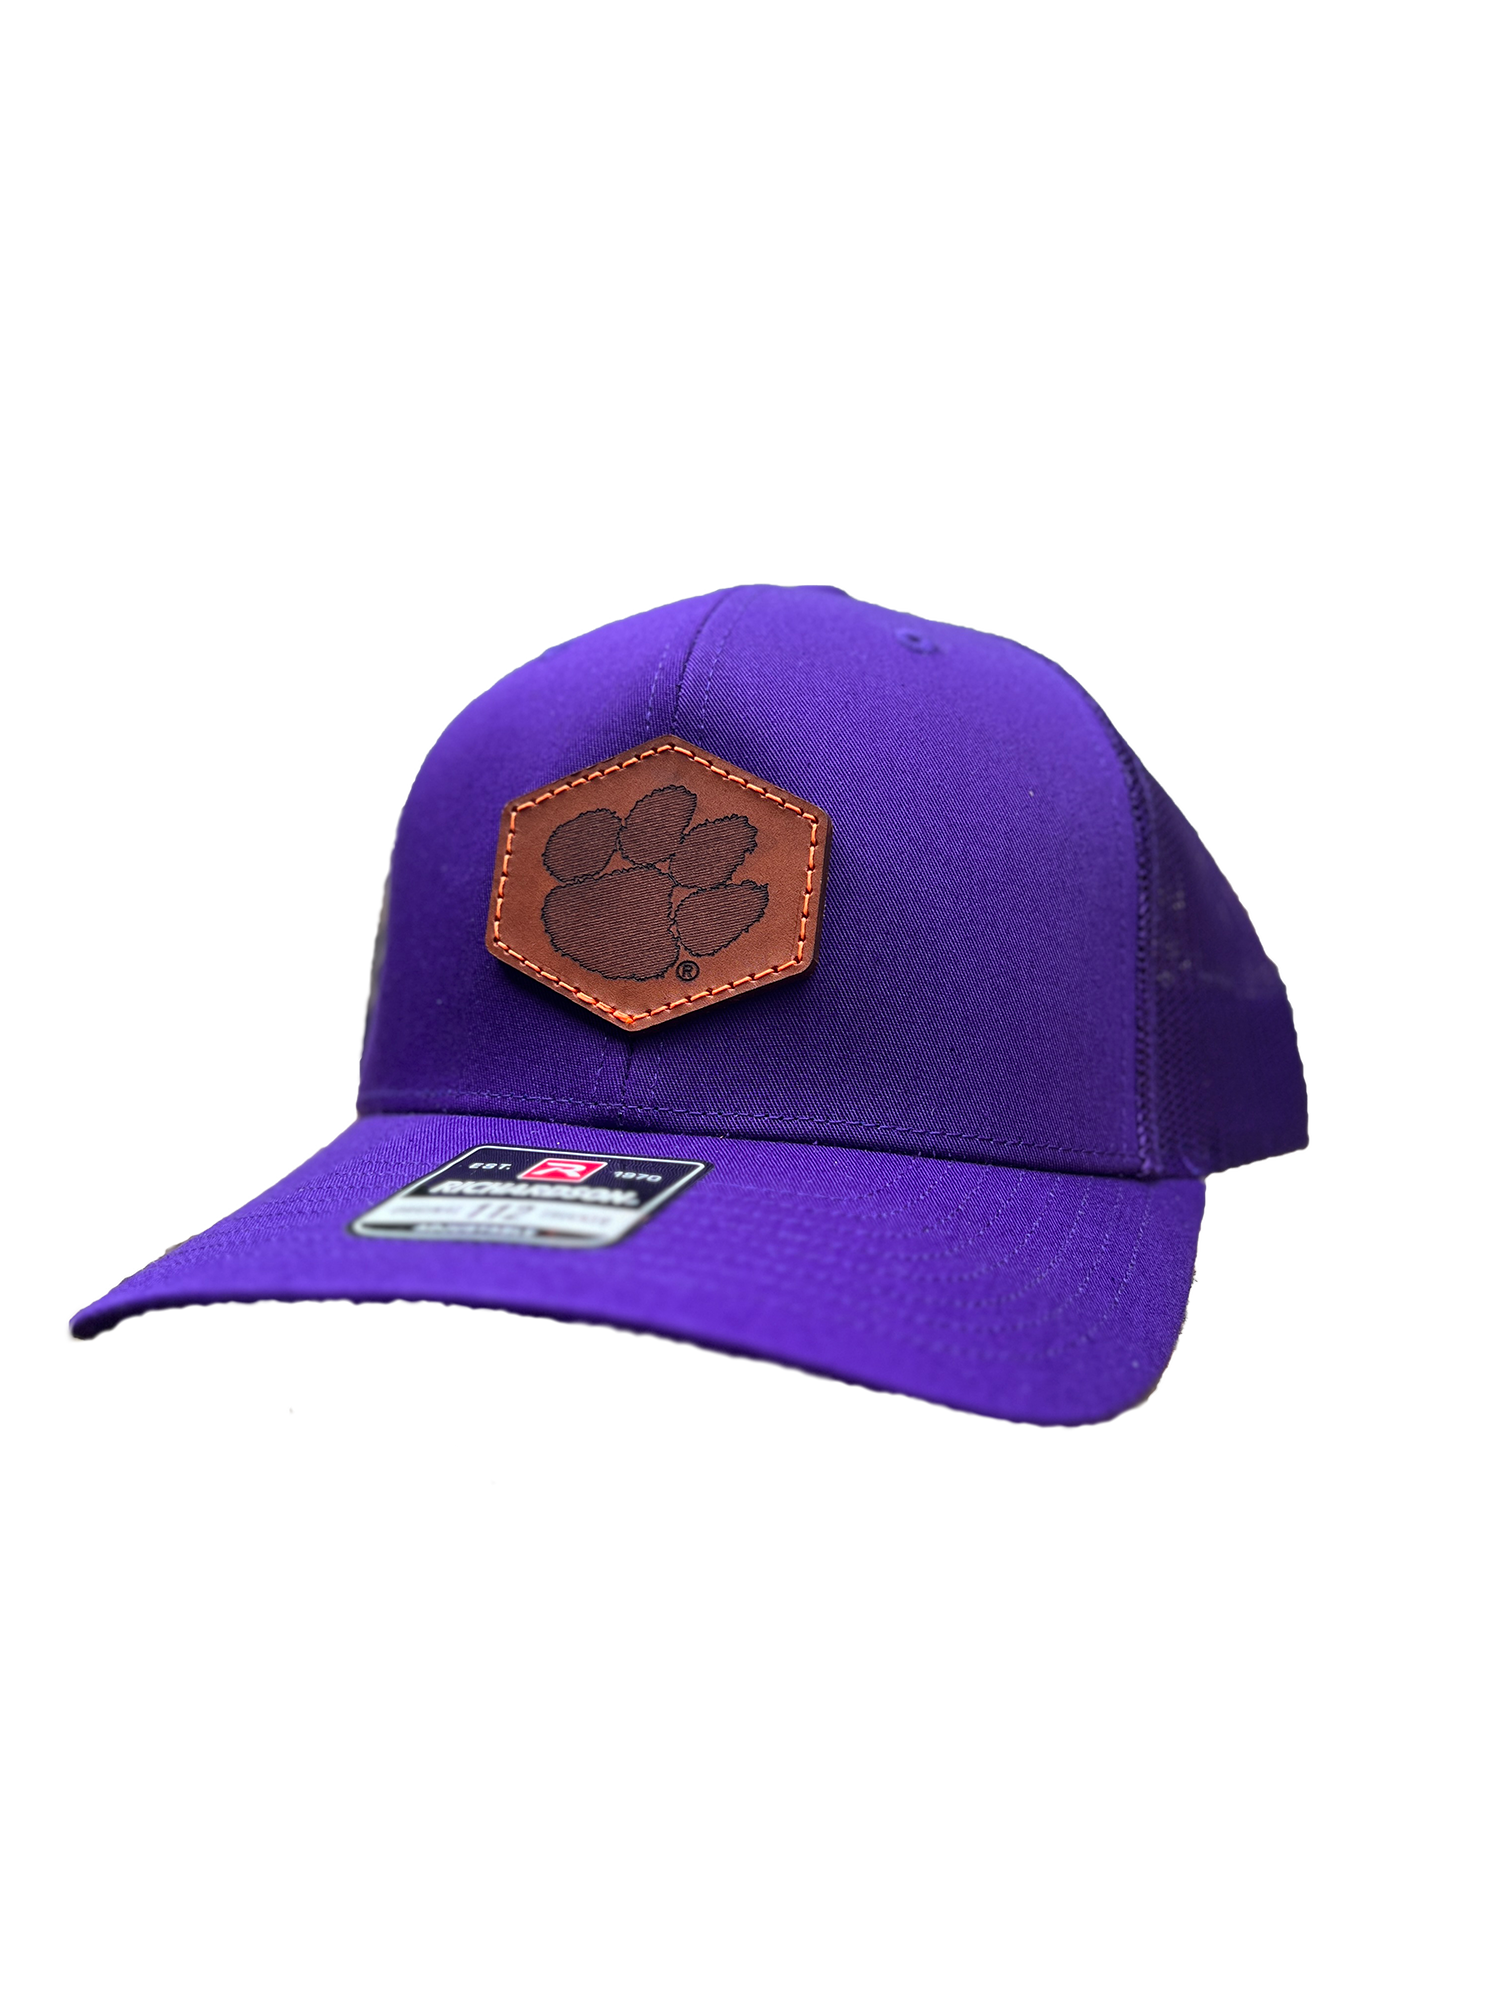 Clemson Patch Purple Hat-(Tiger Paw) Tigers Richardson Leather